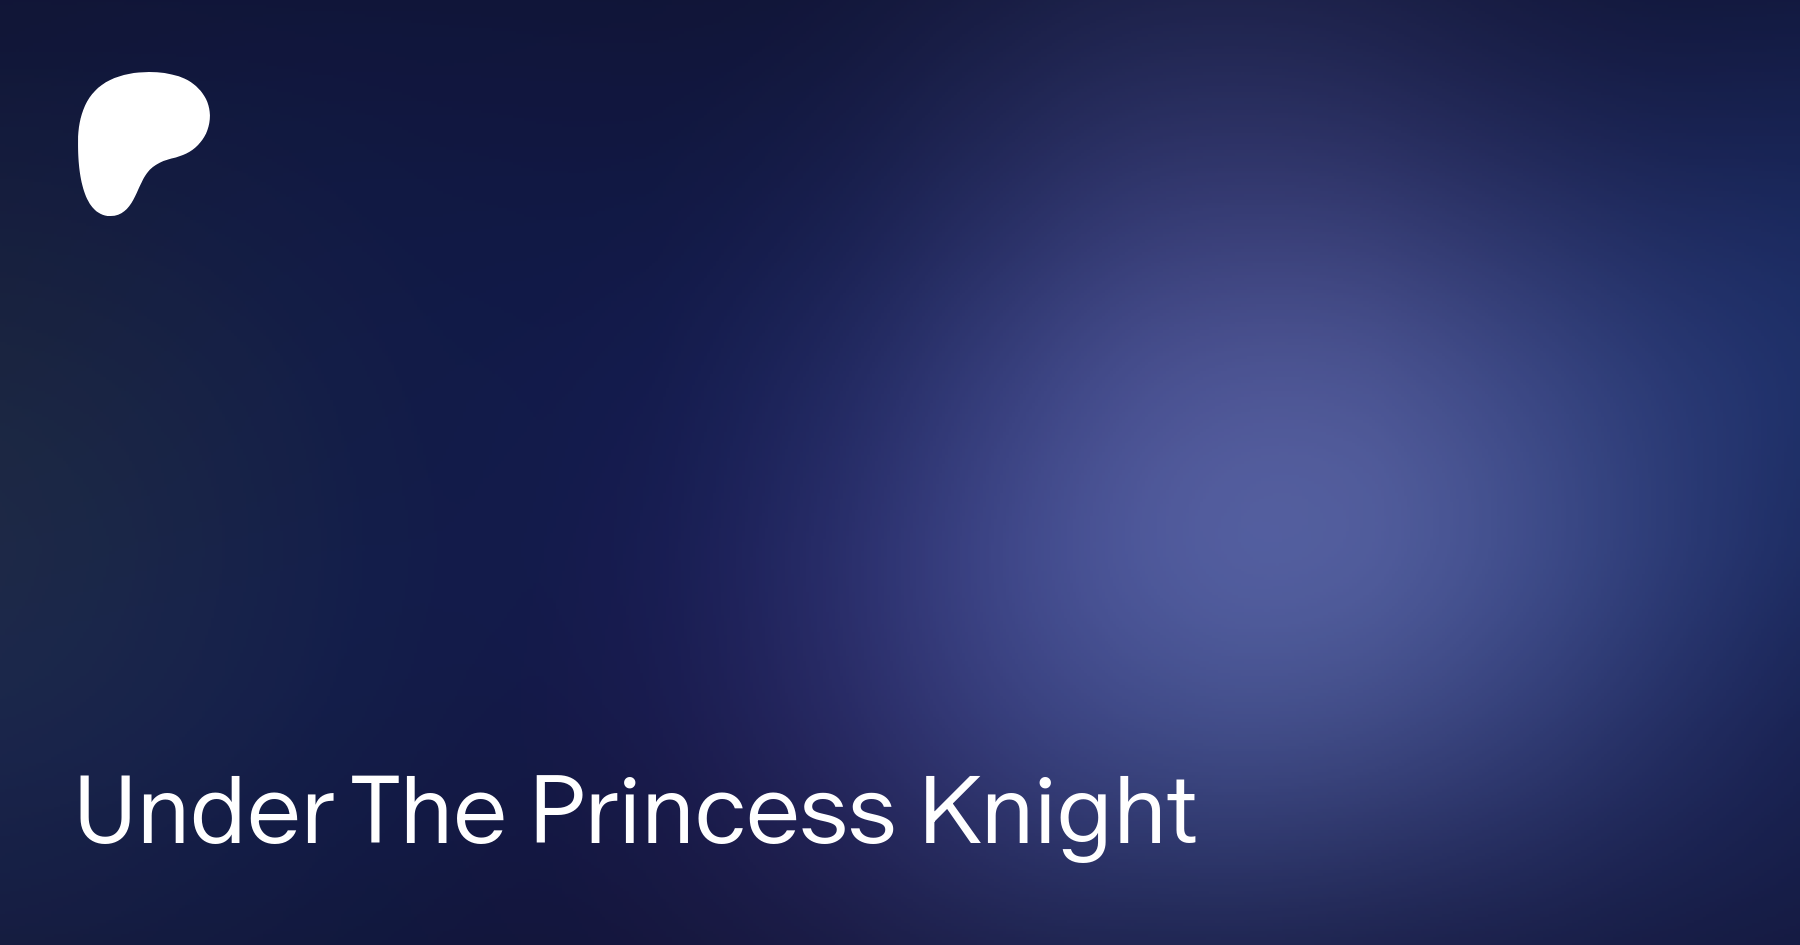 Under the princess knight